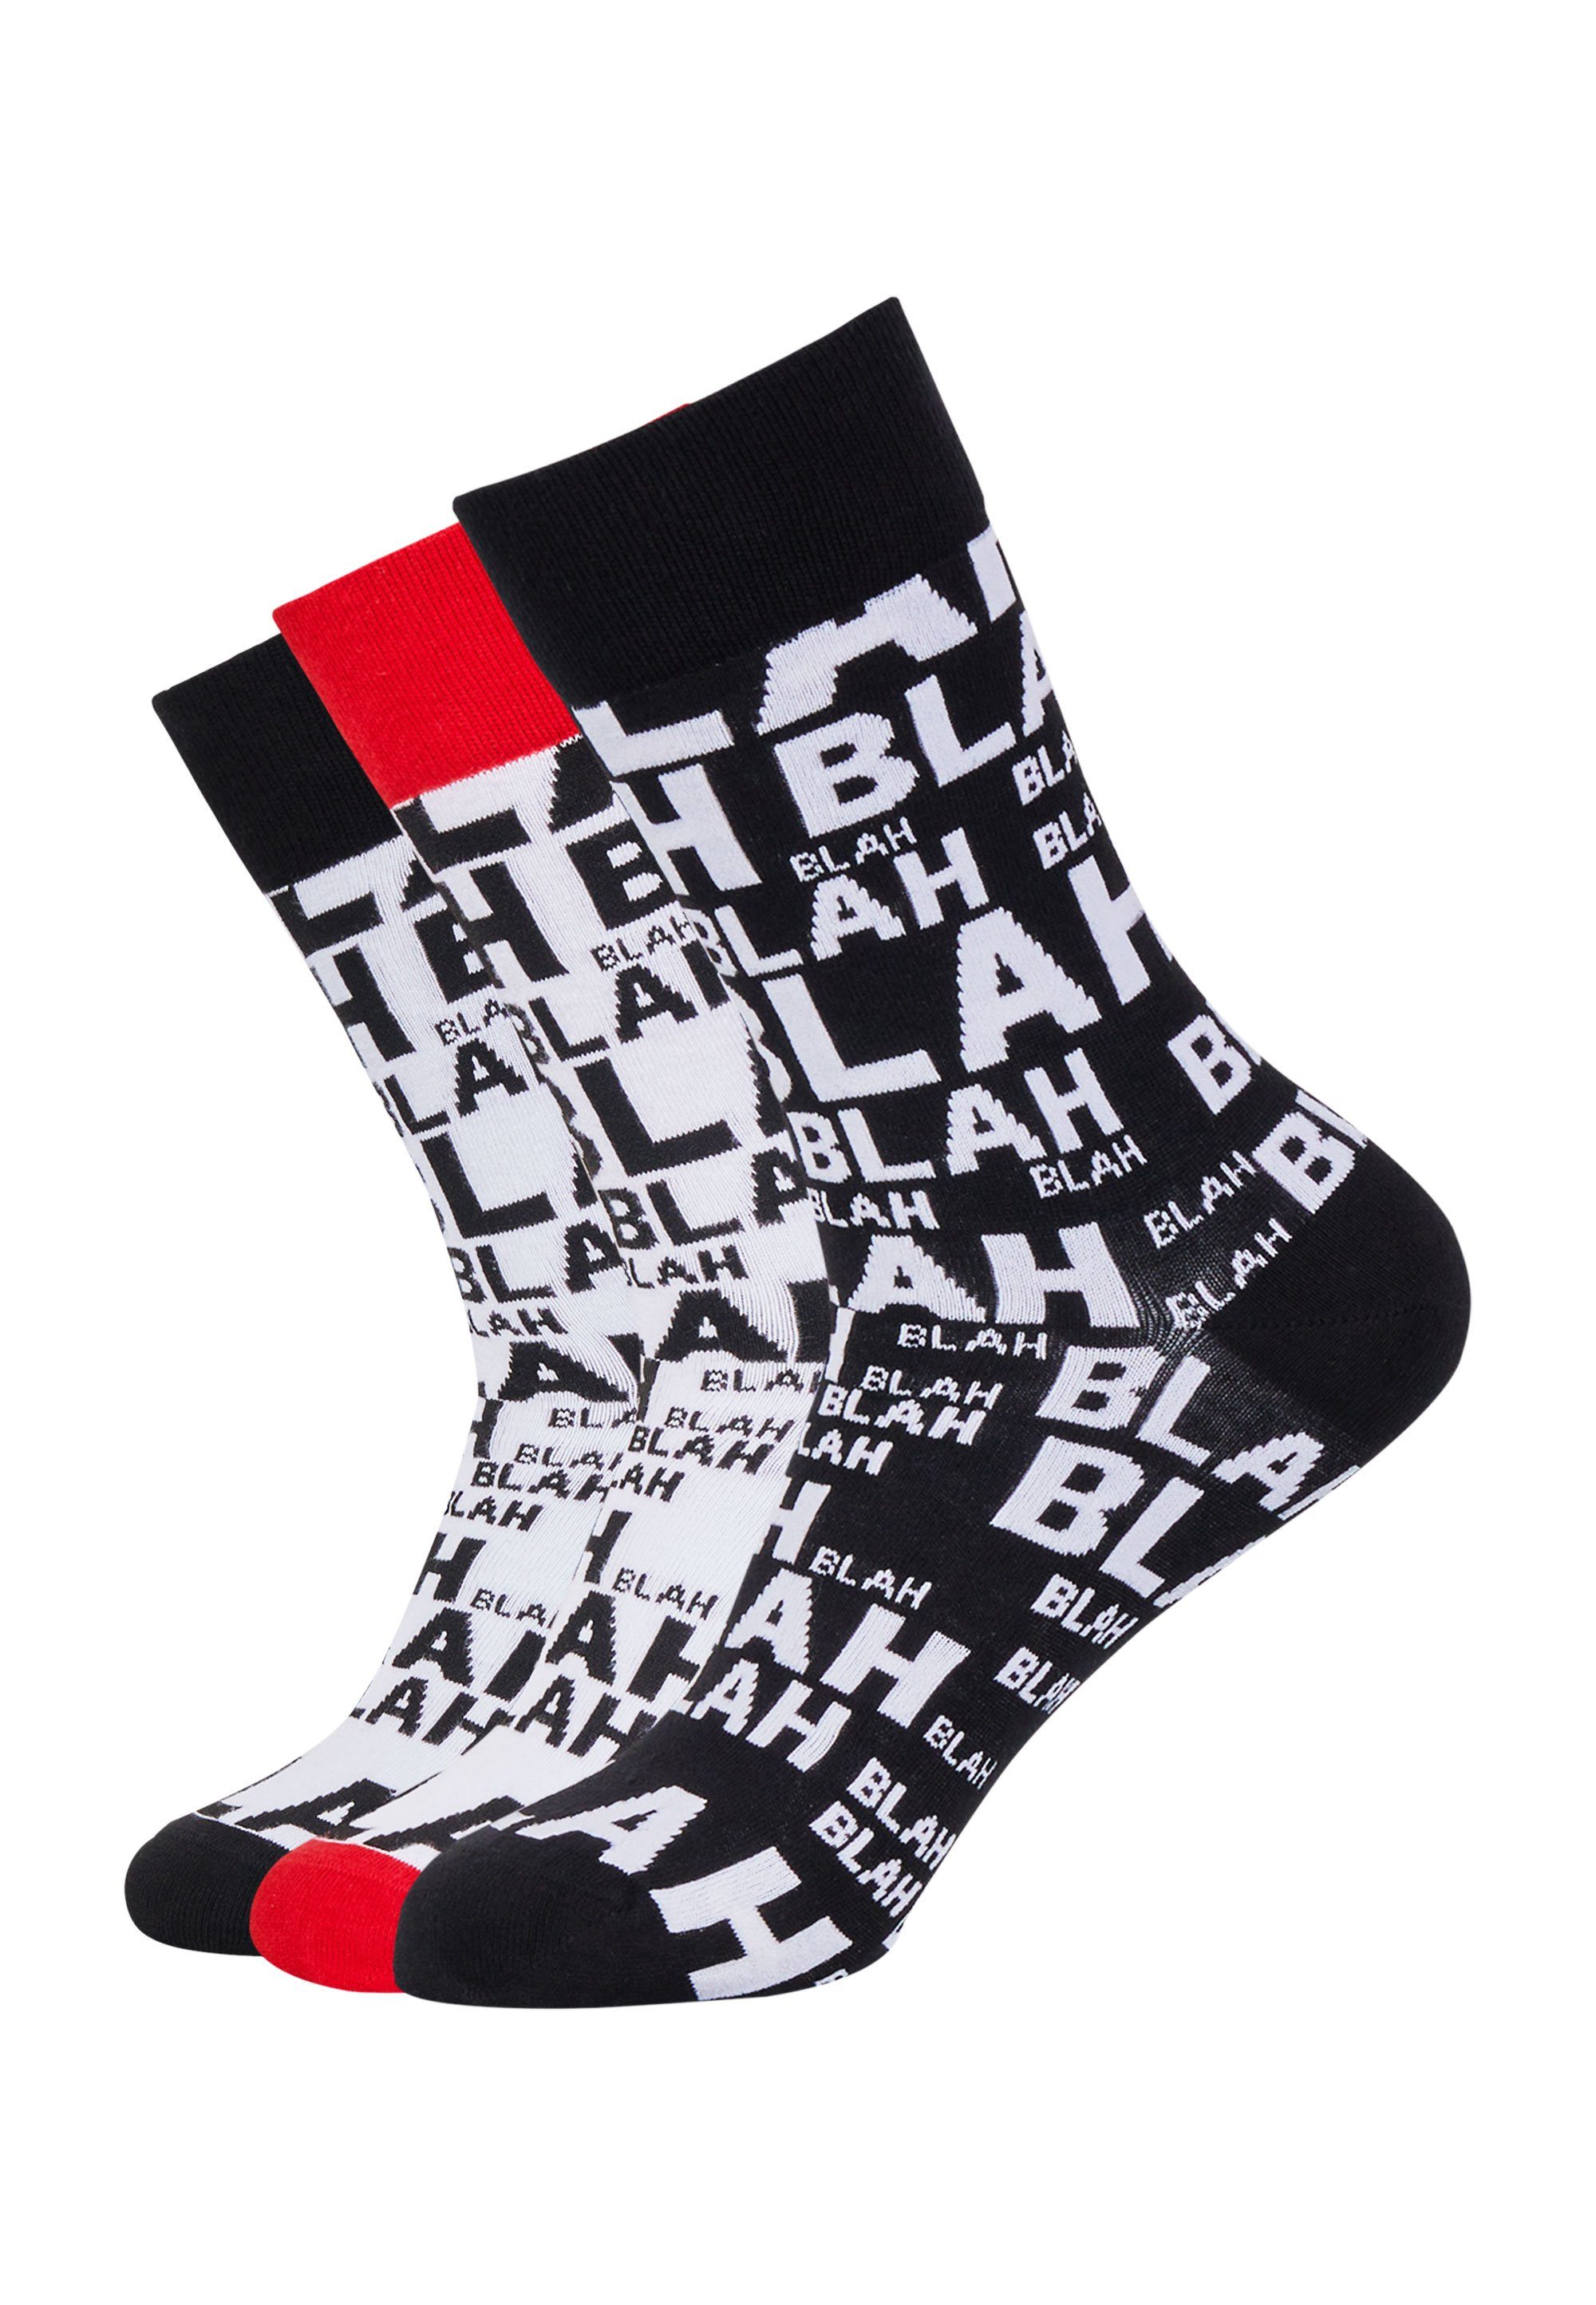 BLAH-BLAH UNHINGED Schriftzug mit dunkelgrau, Mxthersocker schwarz - trendigem (3-Paar) Socken